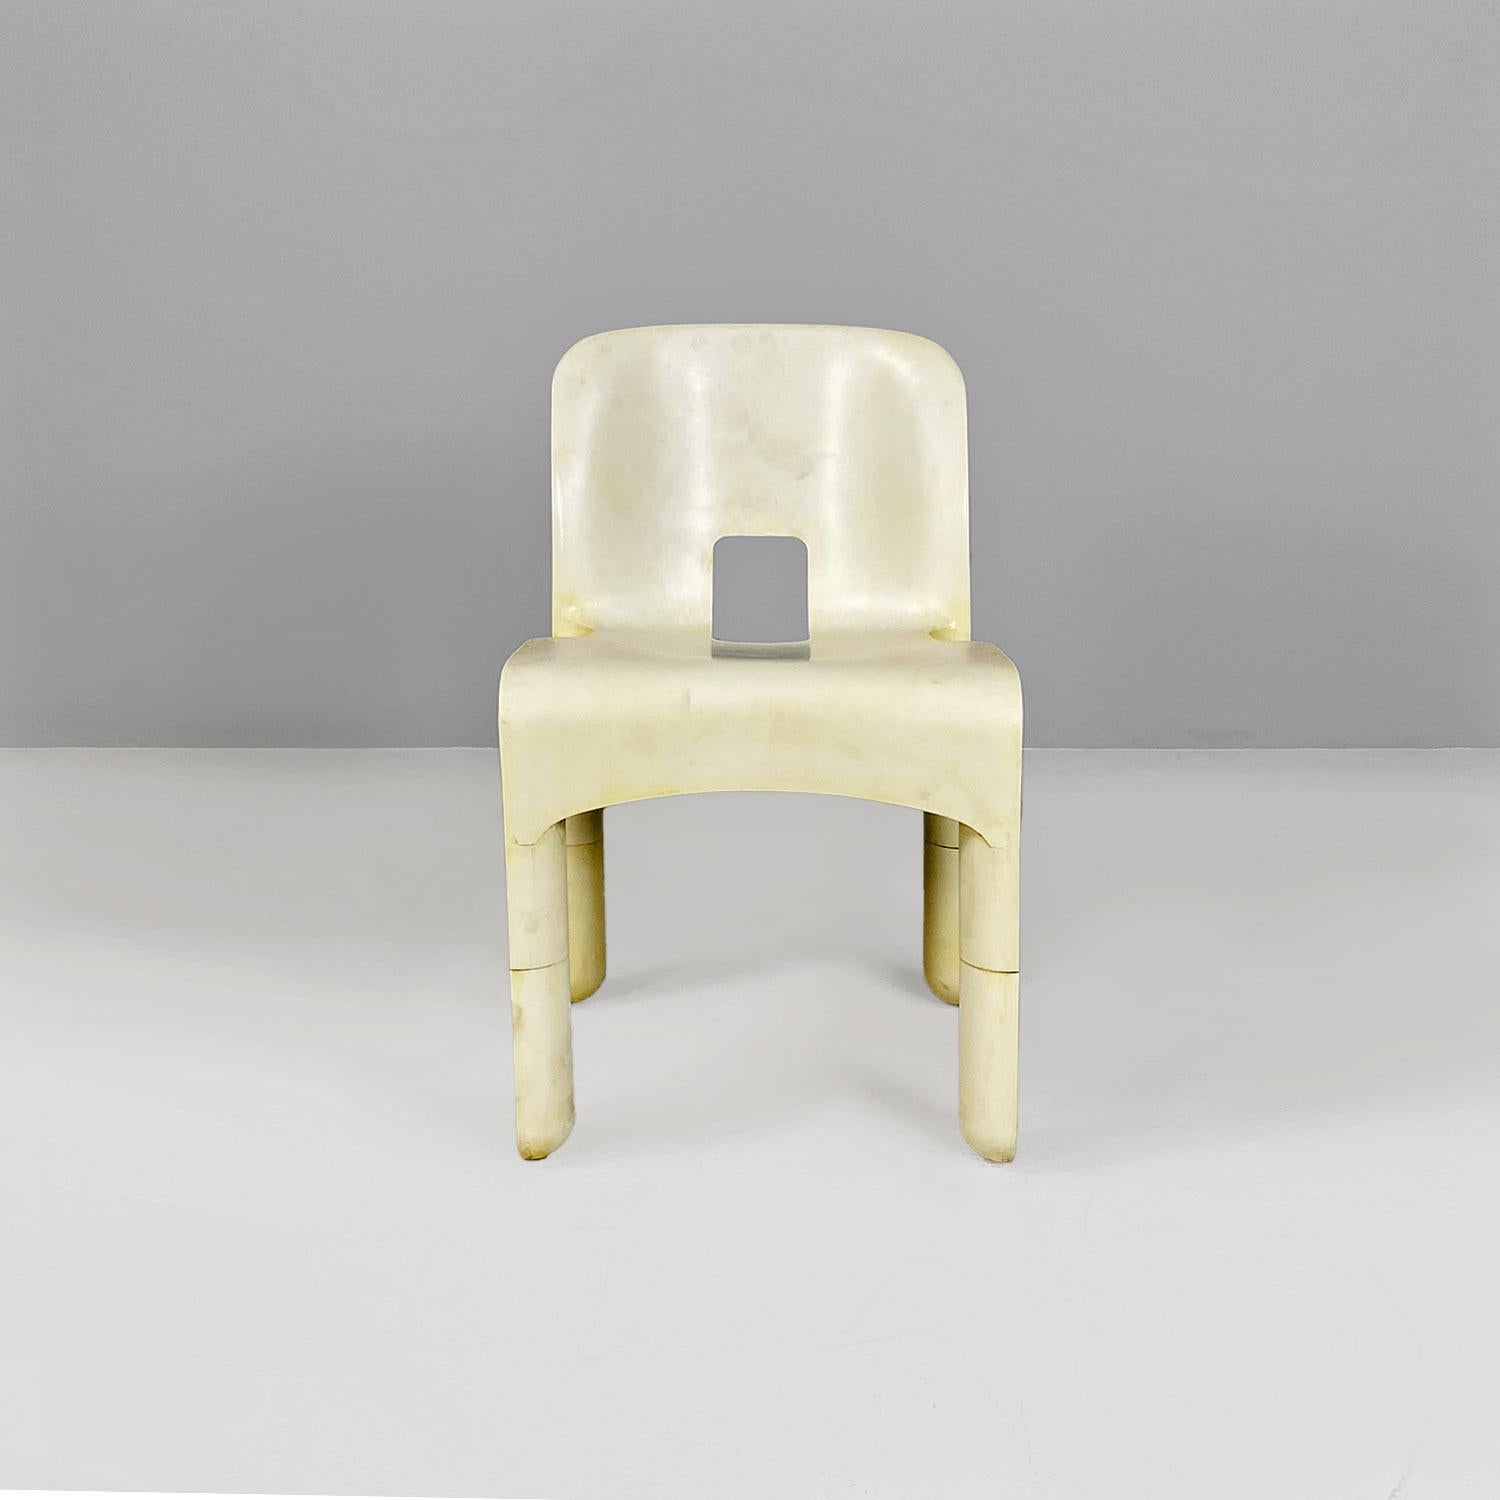 Late 20th Century Italian modern white plastic 860 Universale Chairs, Joe Colombo, Kartell, 1970s For Sale